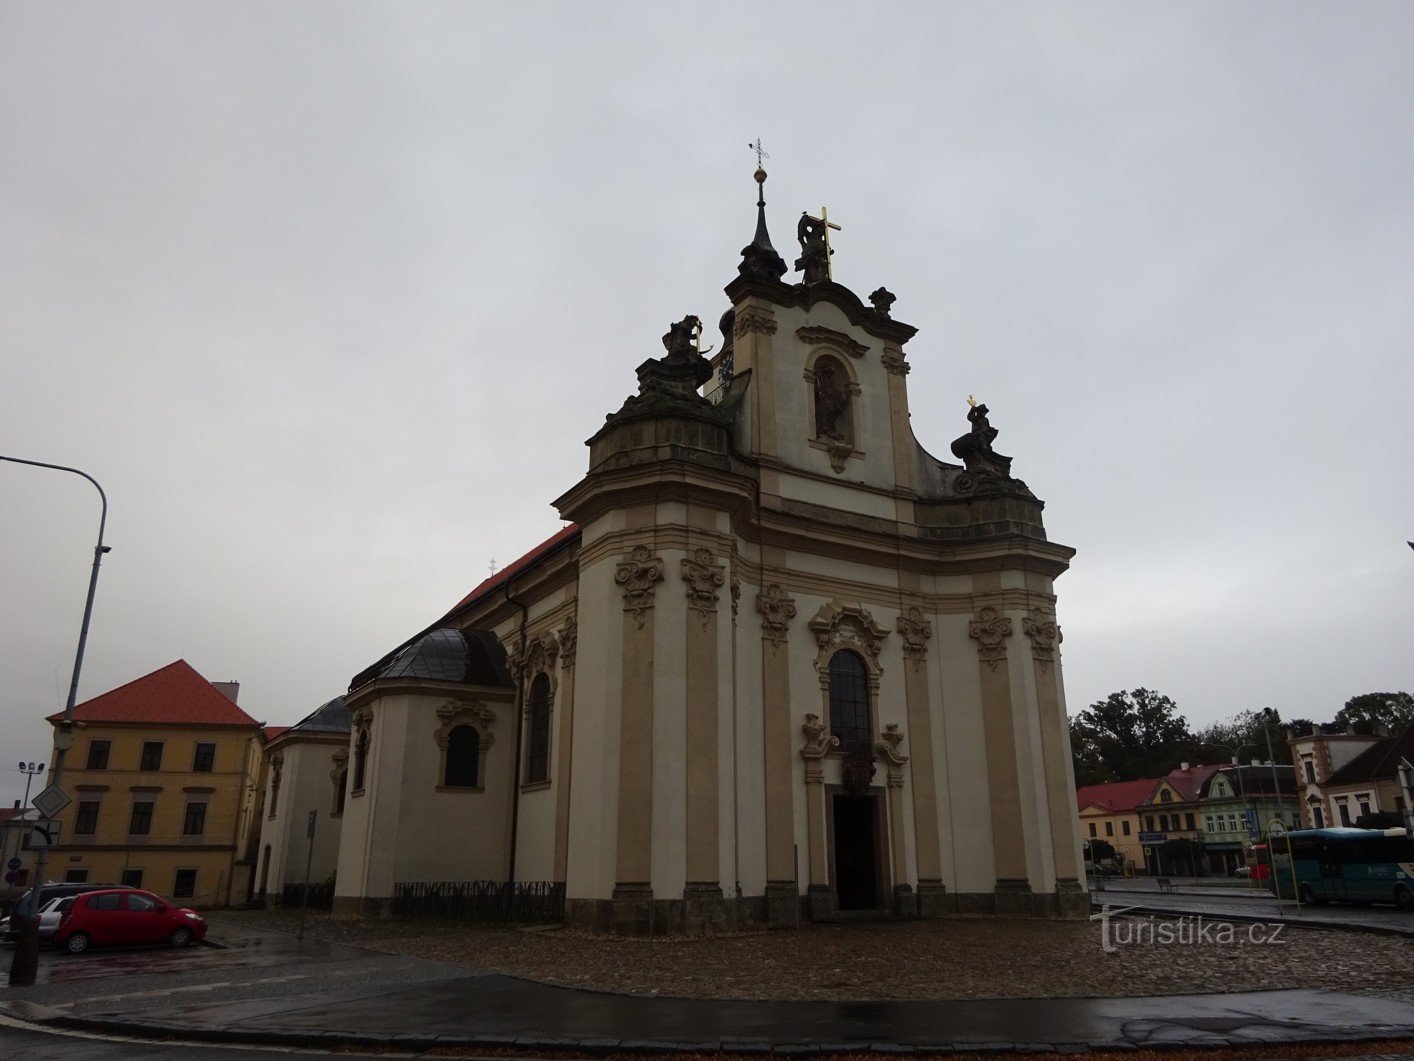 Heřmanův Městec and dean's church of St. Bartholomew